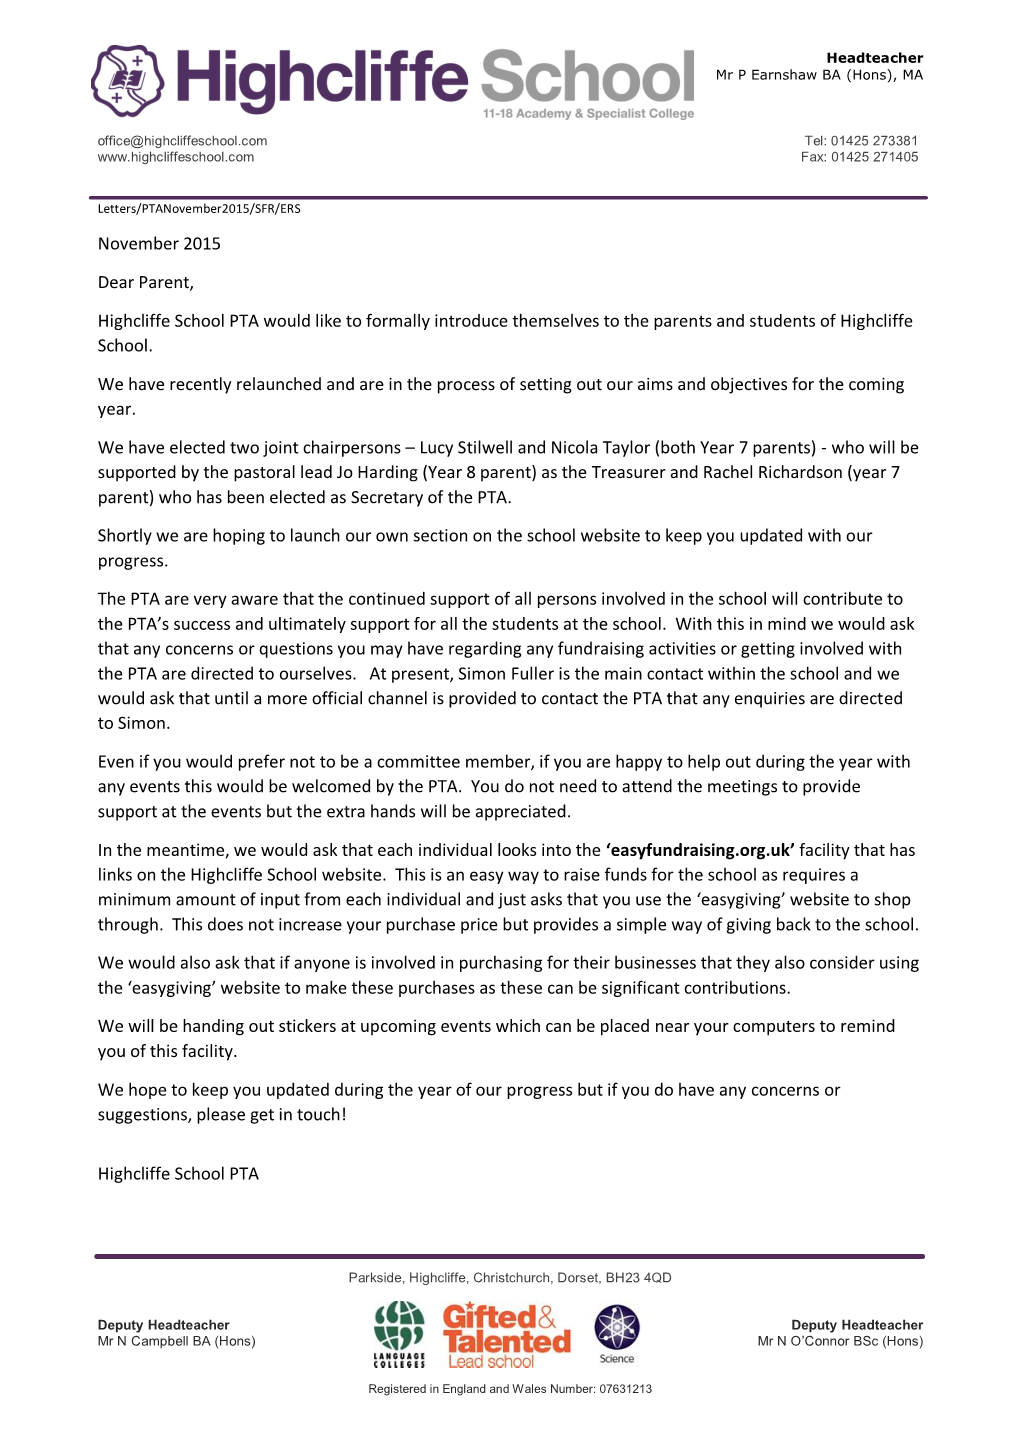 November 2015 Dear Parent, Highcliffe School PTA Would Like To